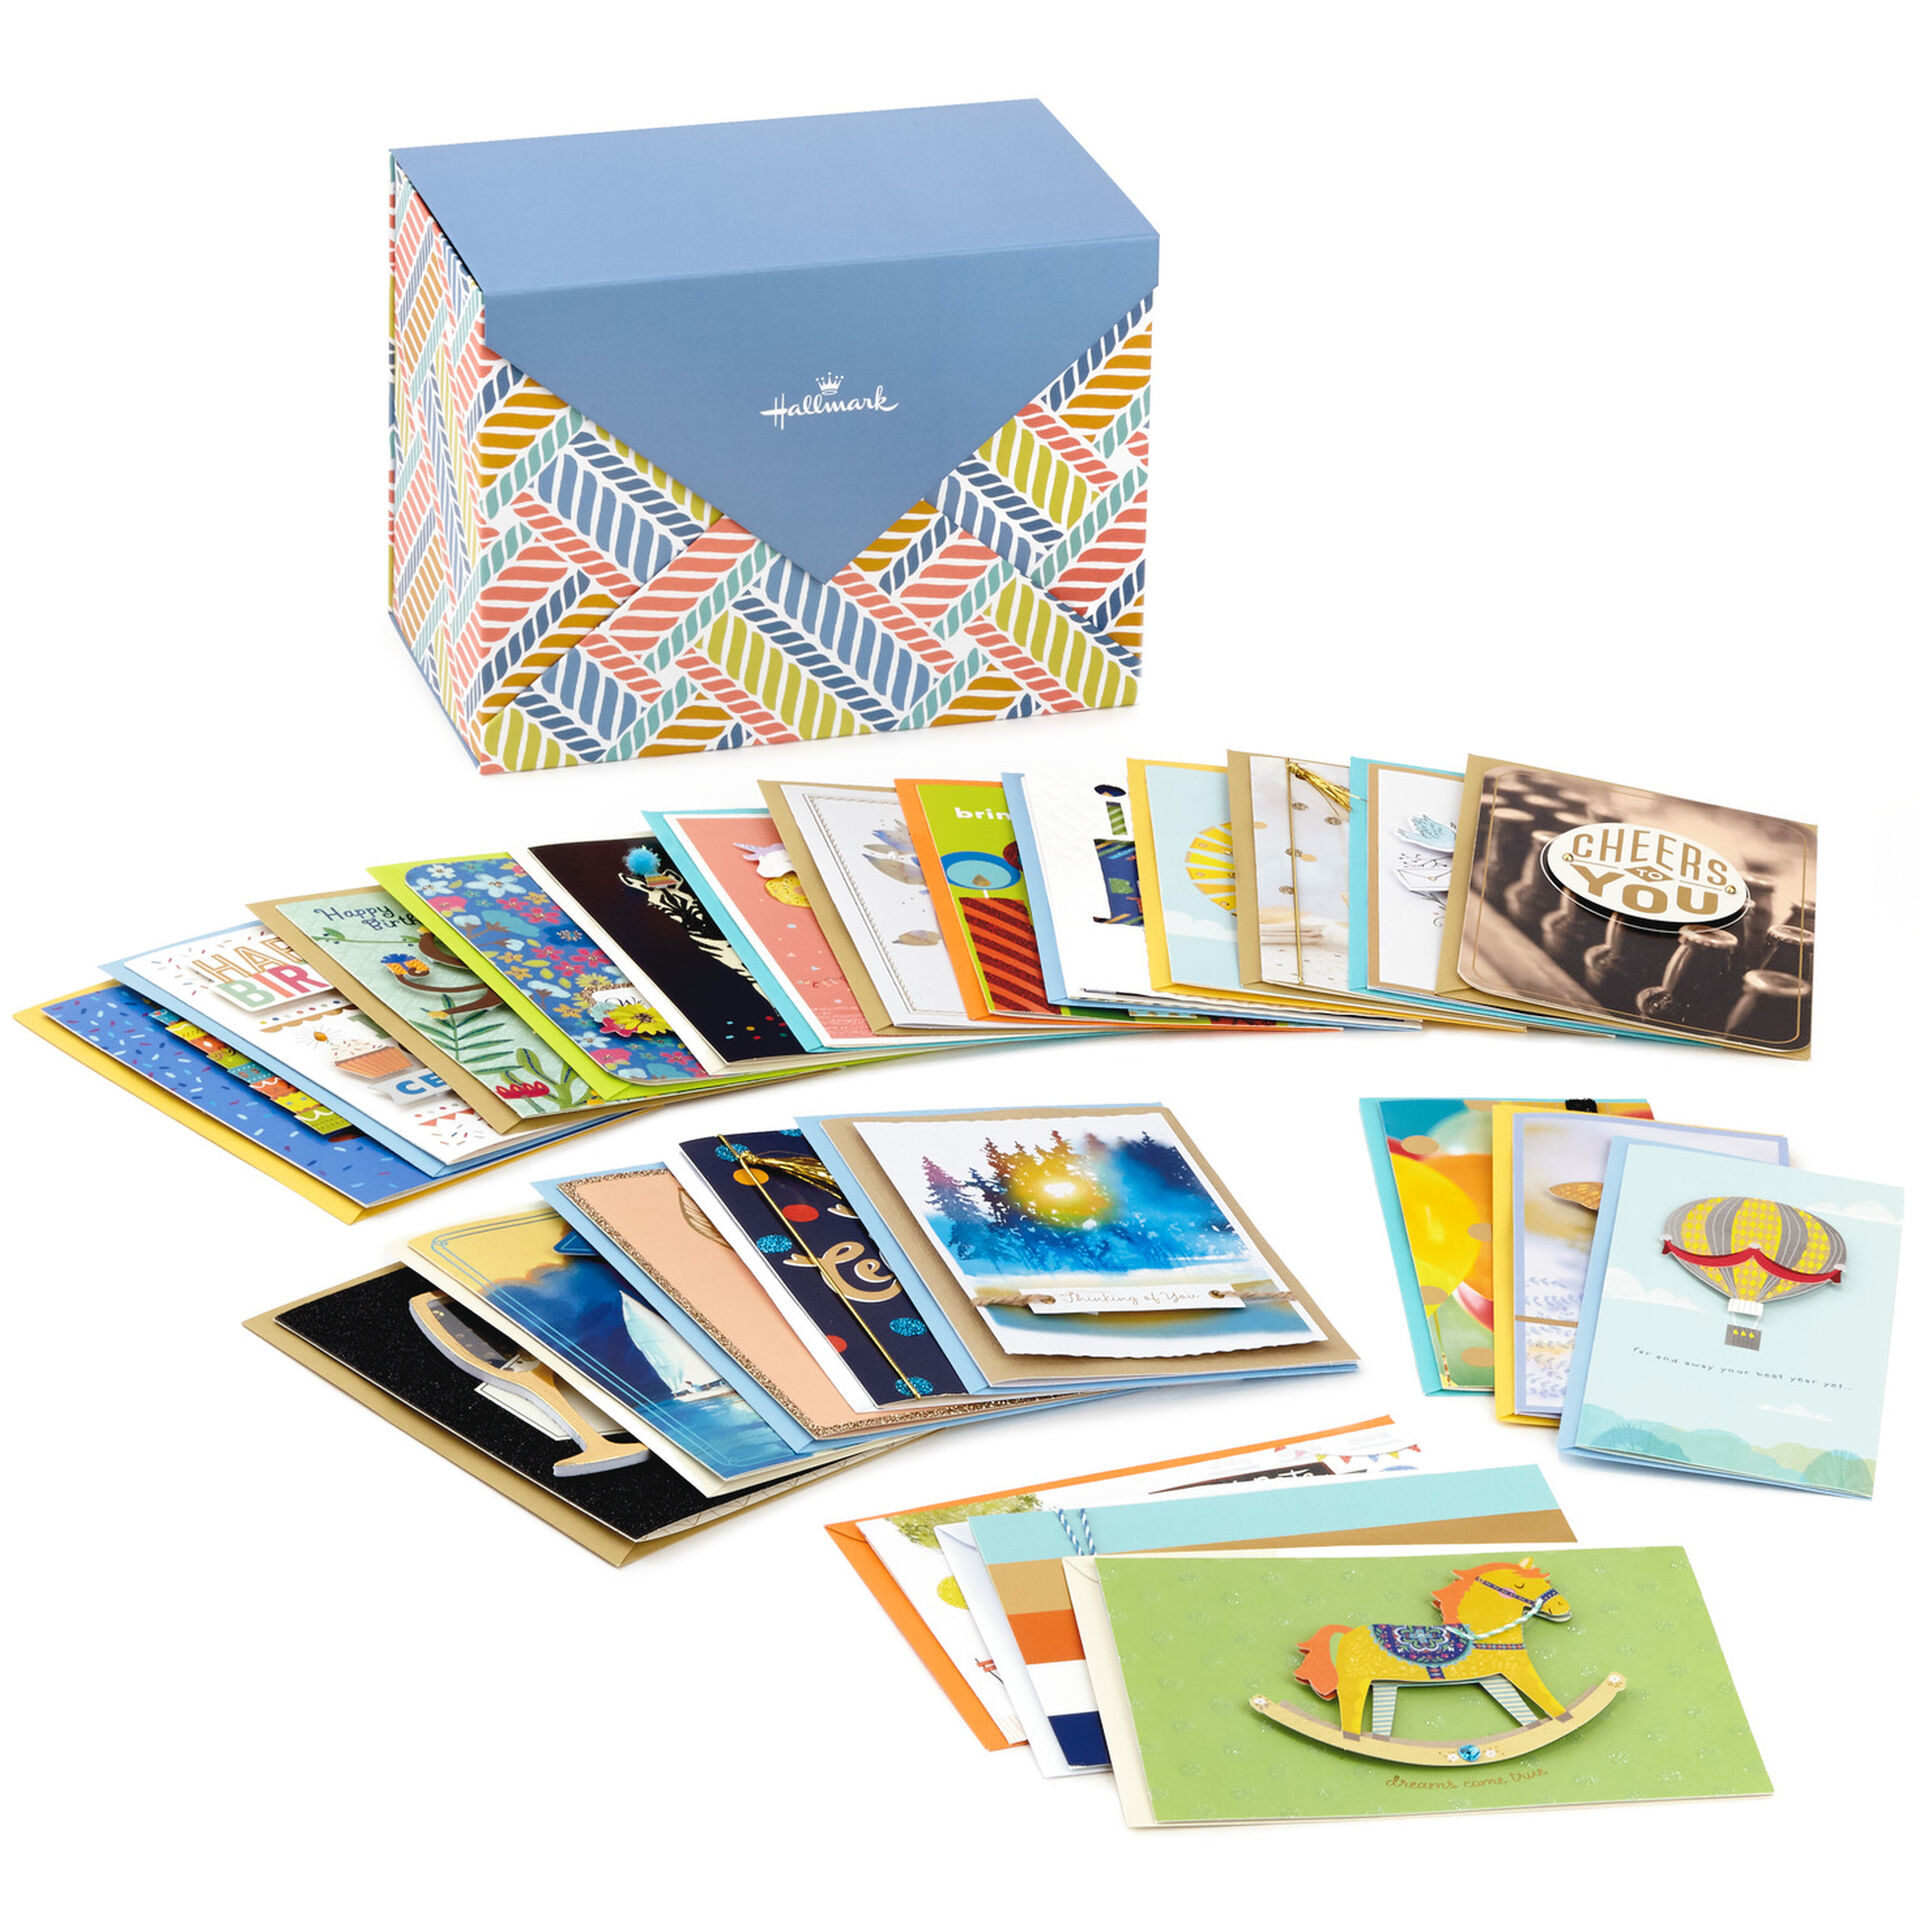 Hallmark Box of 20 Handmade Holiday Cards 